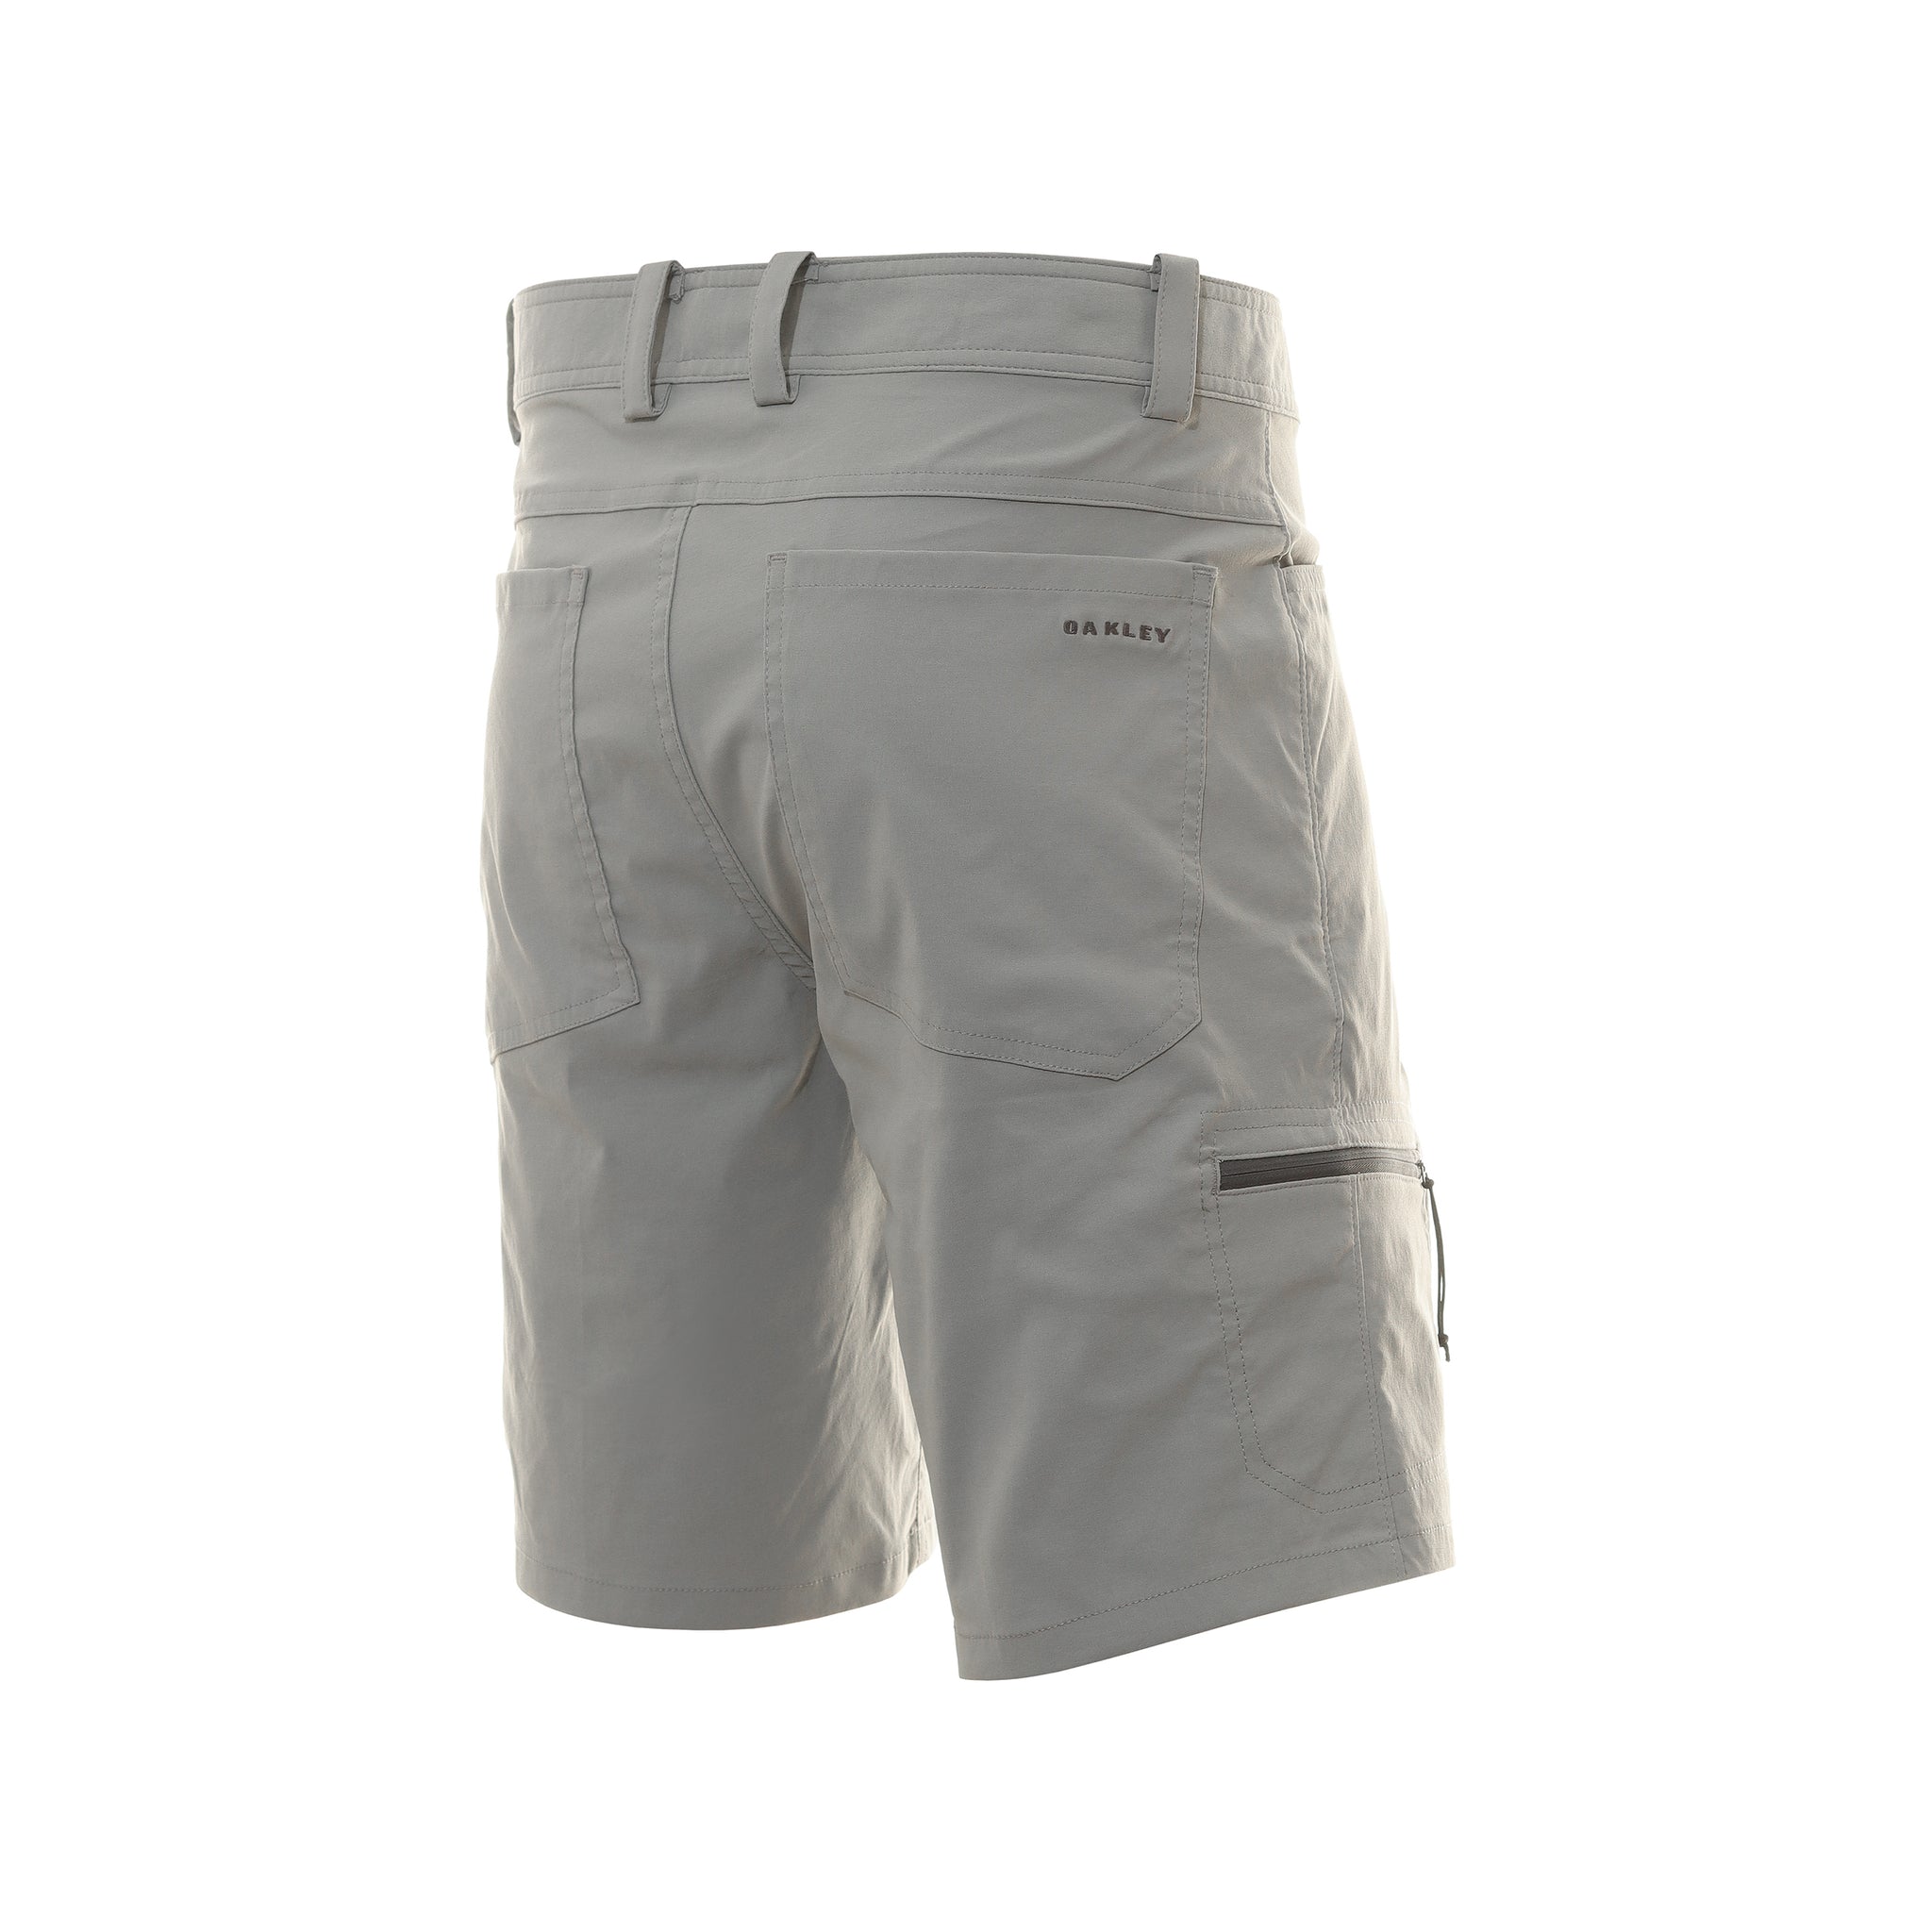 oakley-hybrid-shorts-405033-neutral-grey-21p